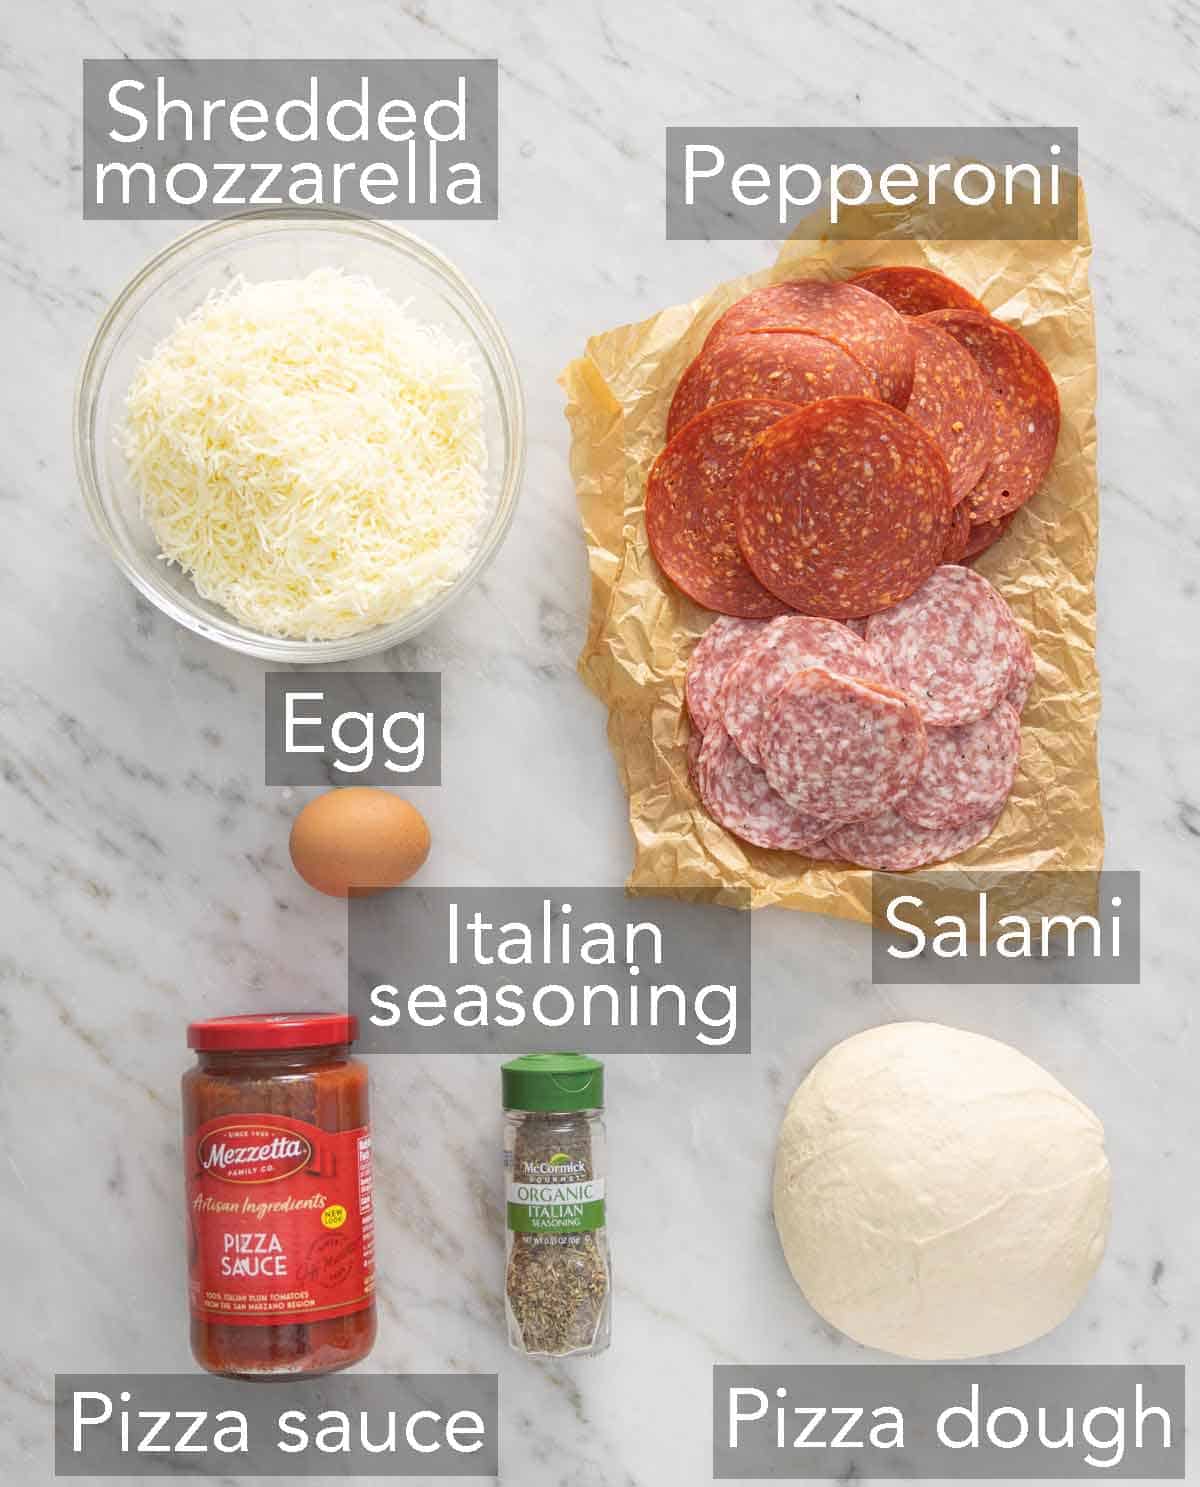 Ingredients for stromboli.